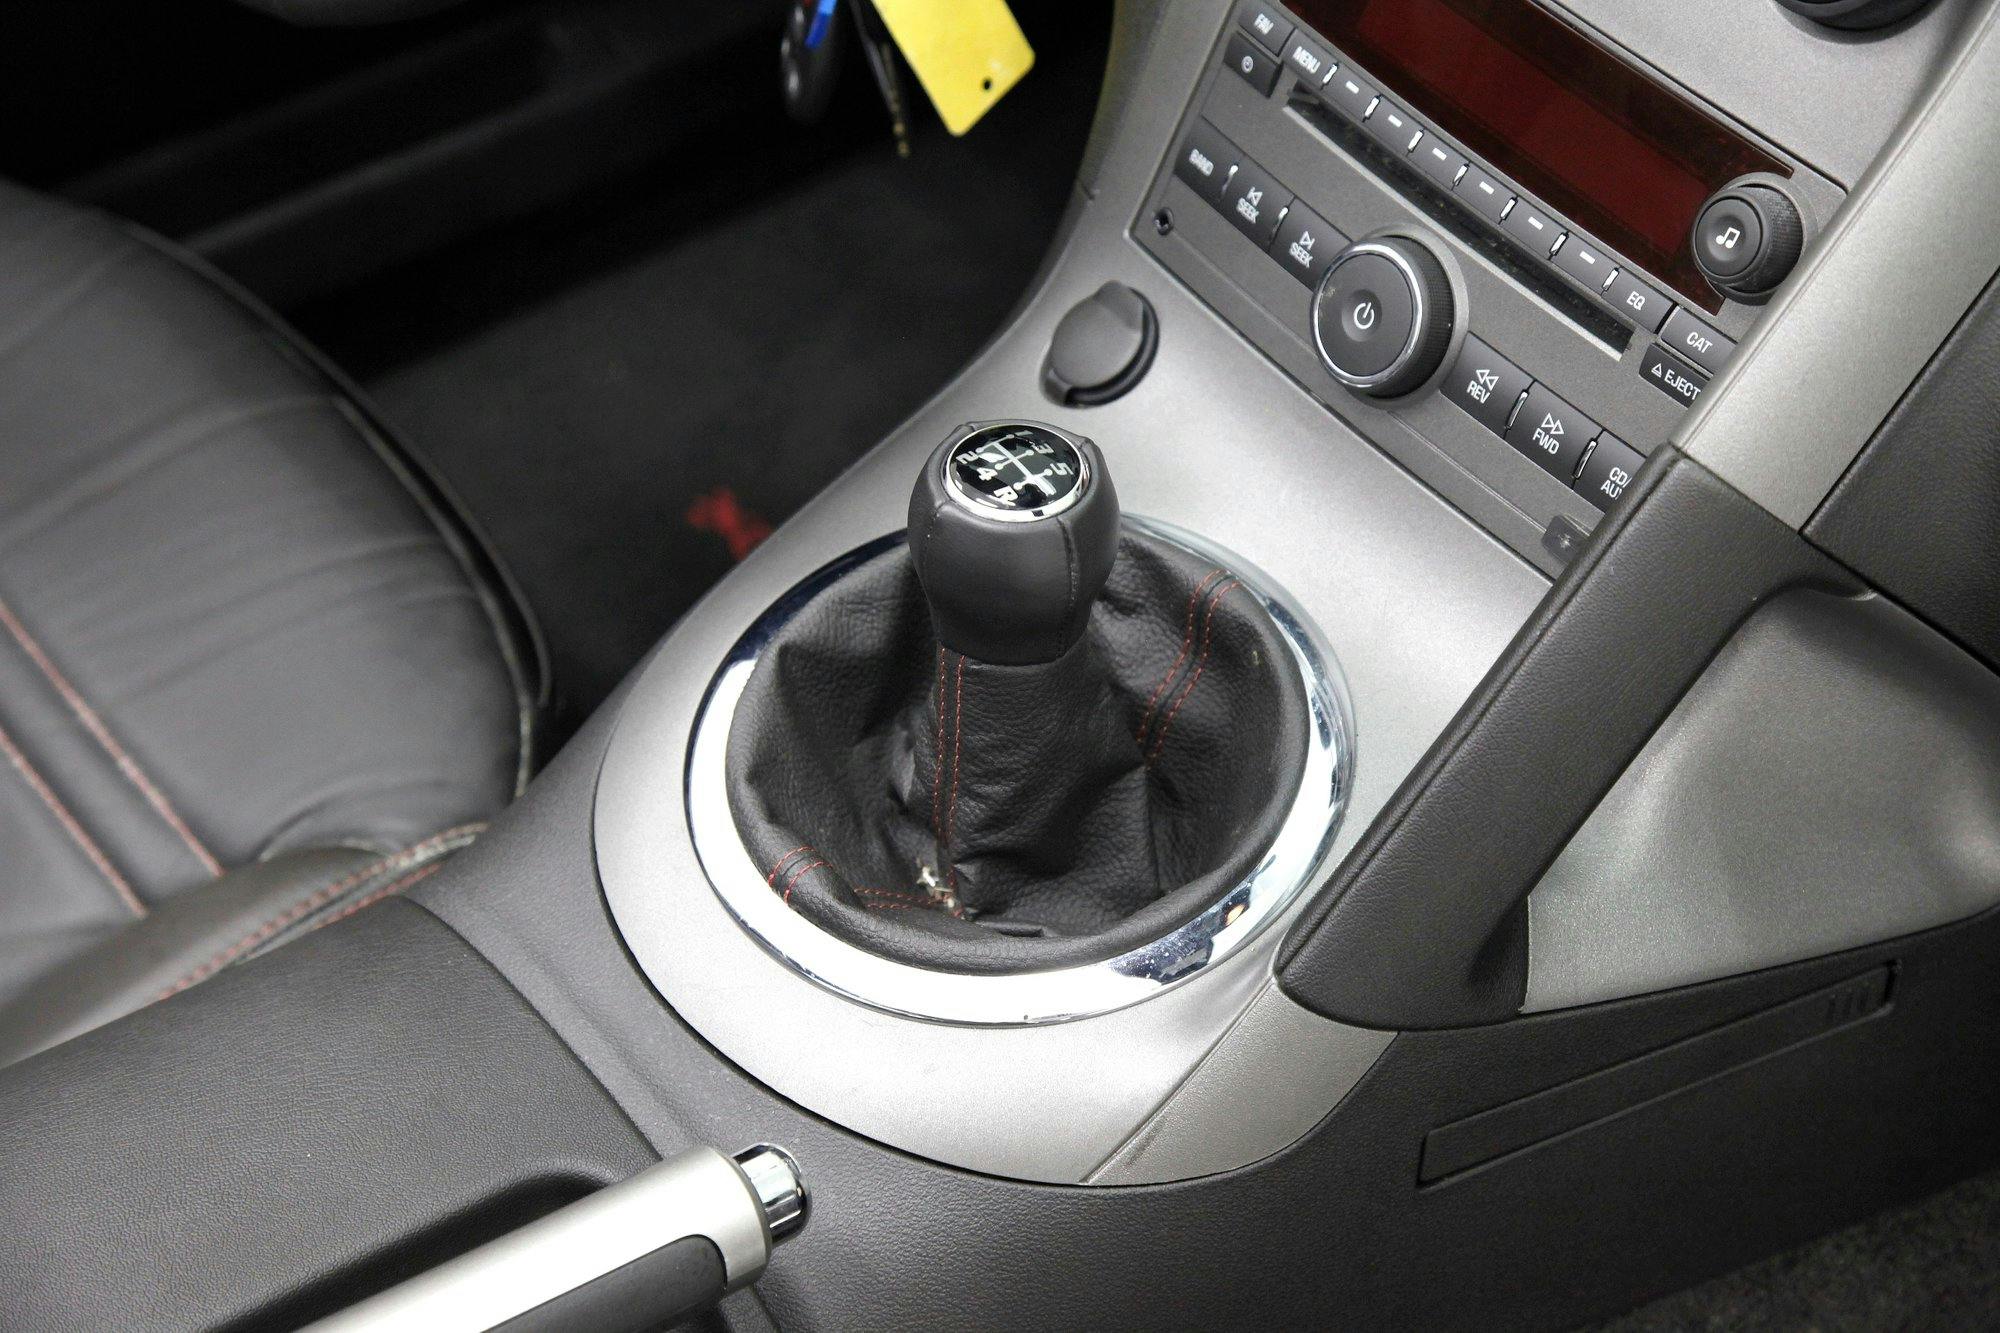 2009 Pontiac Solstice GXP interior center console 5 speed shifter